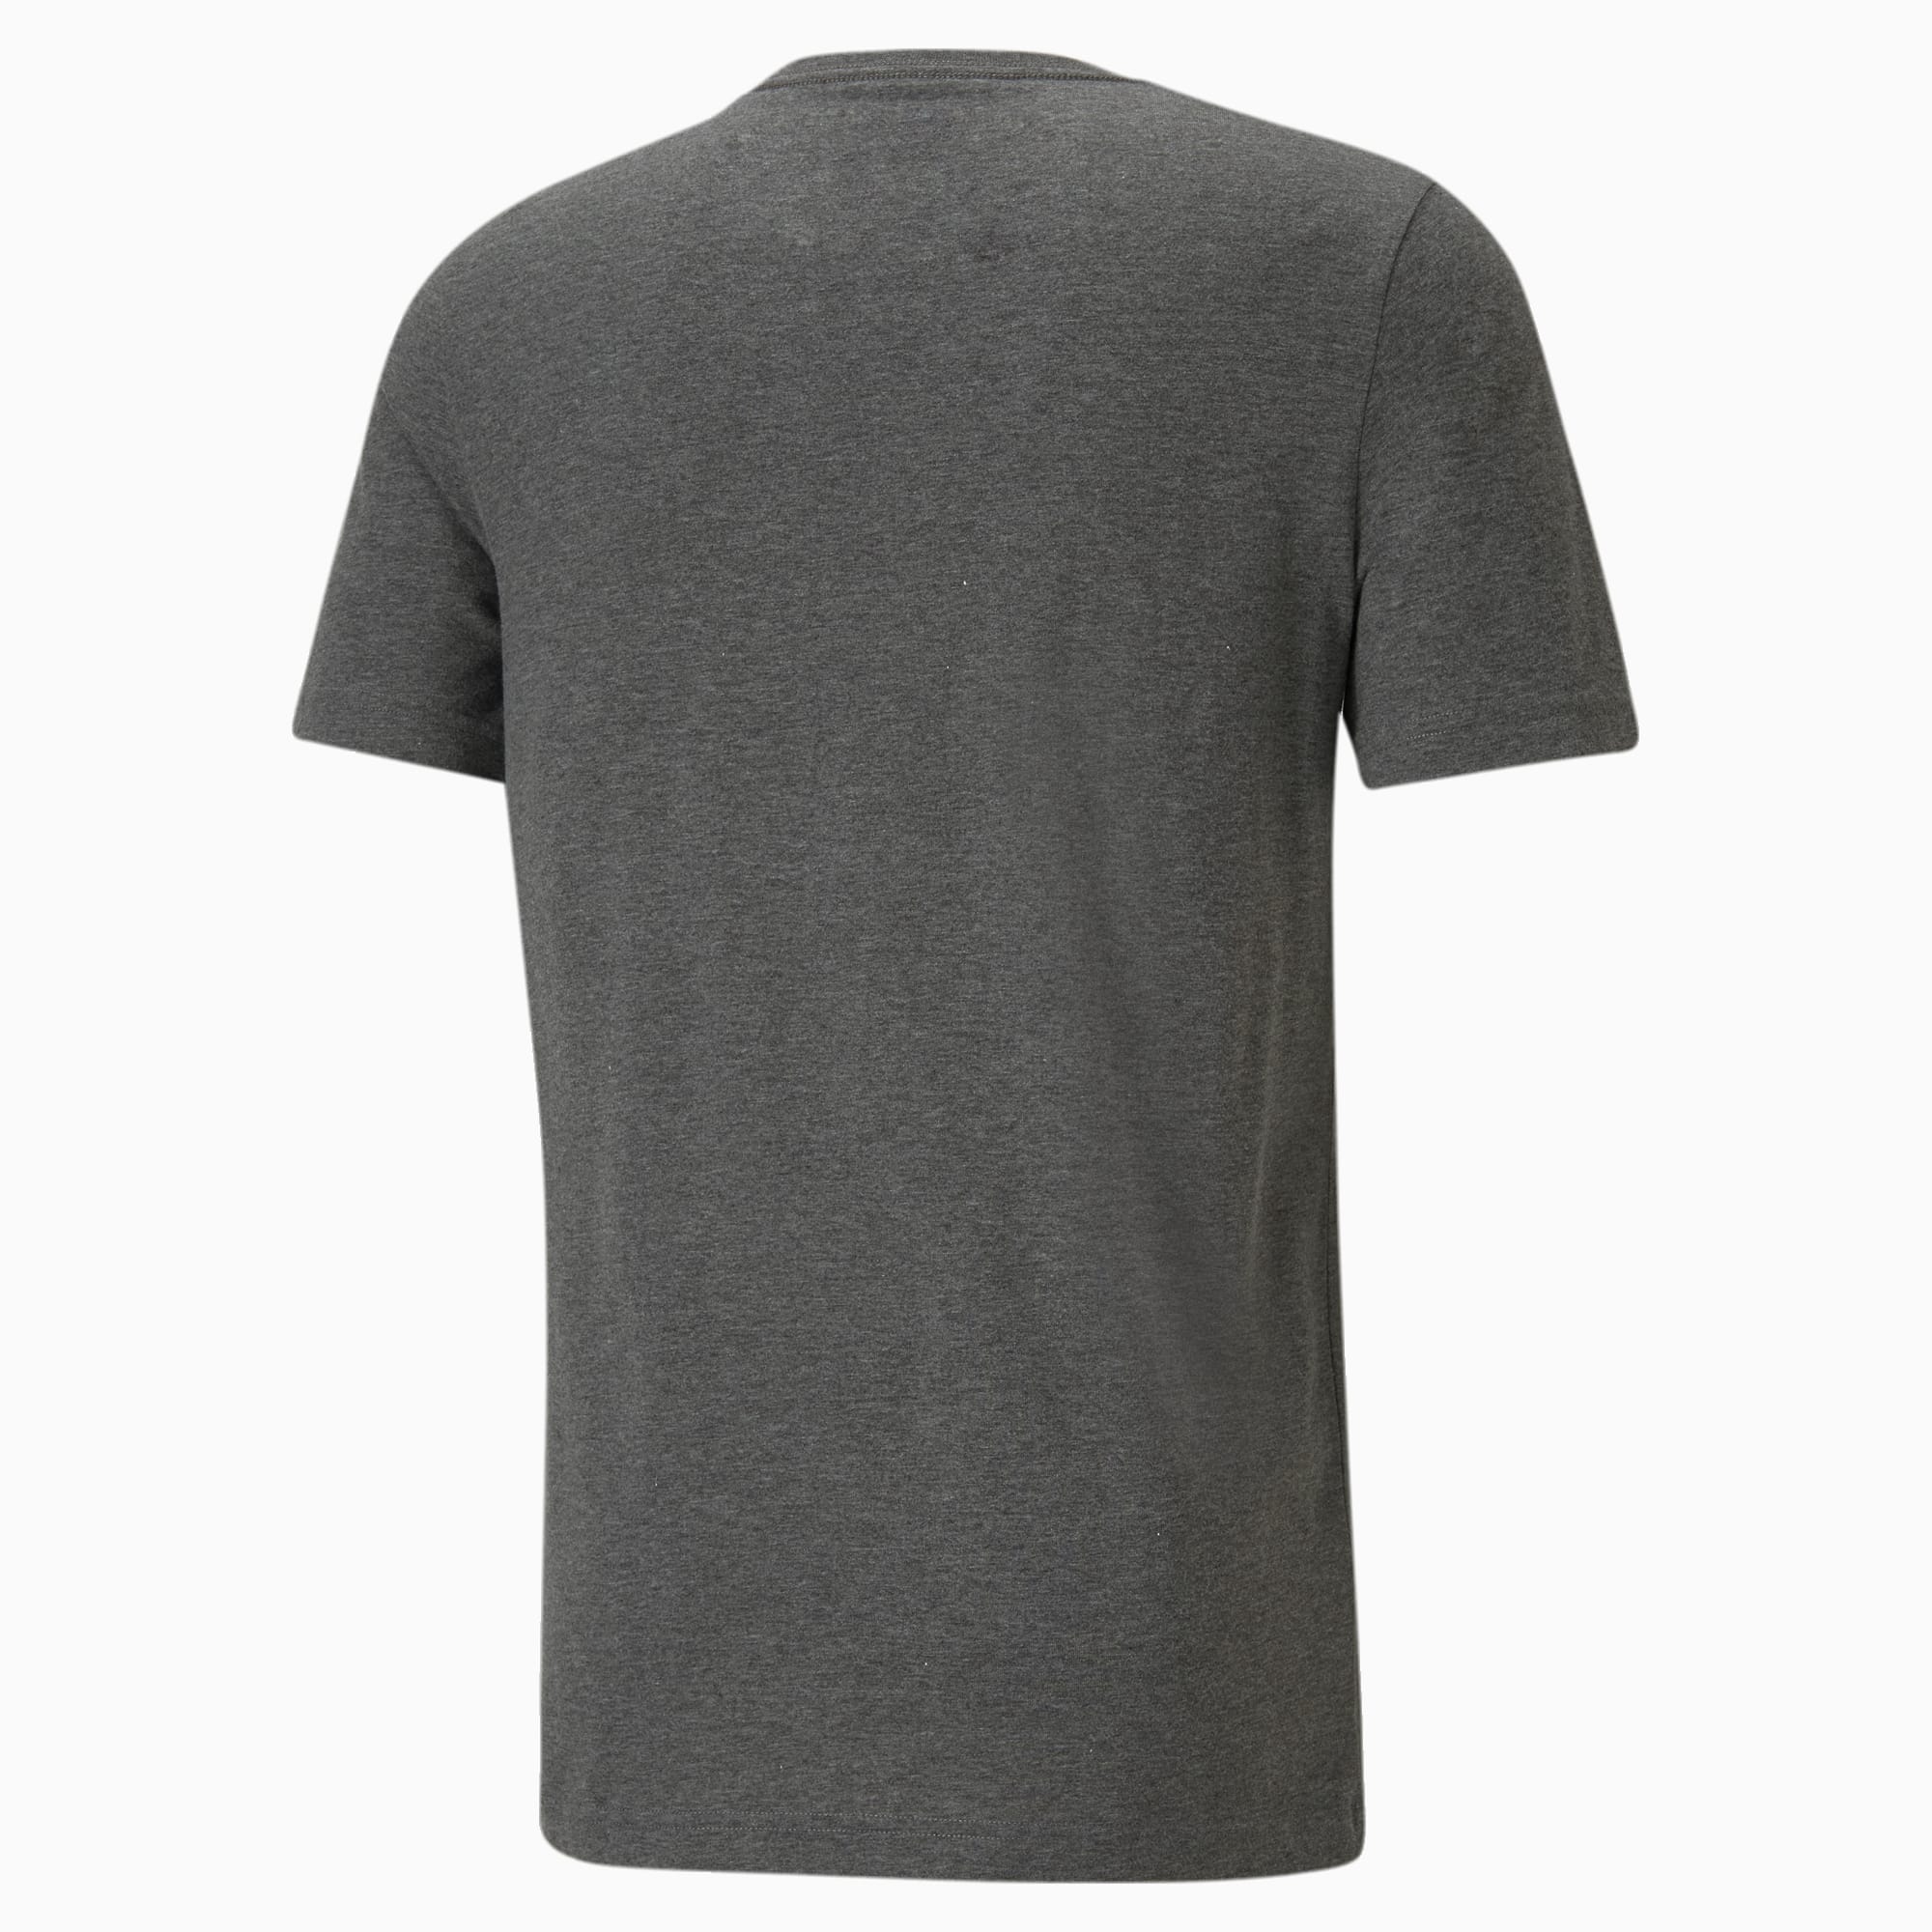 PUMA Essentials Heather Men's T-Shirt, Black, Size S, Clothing